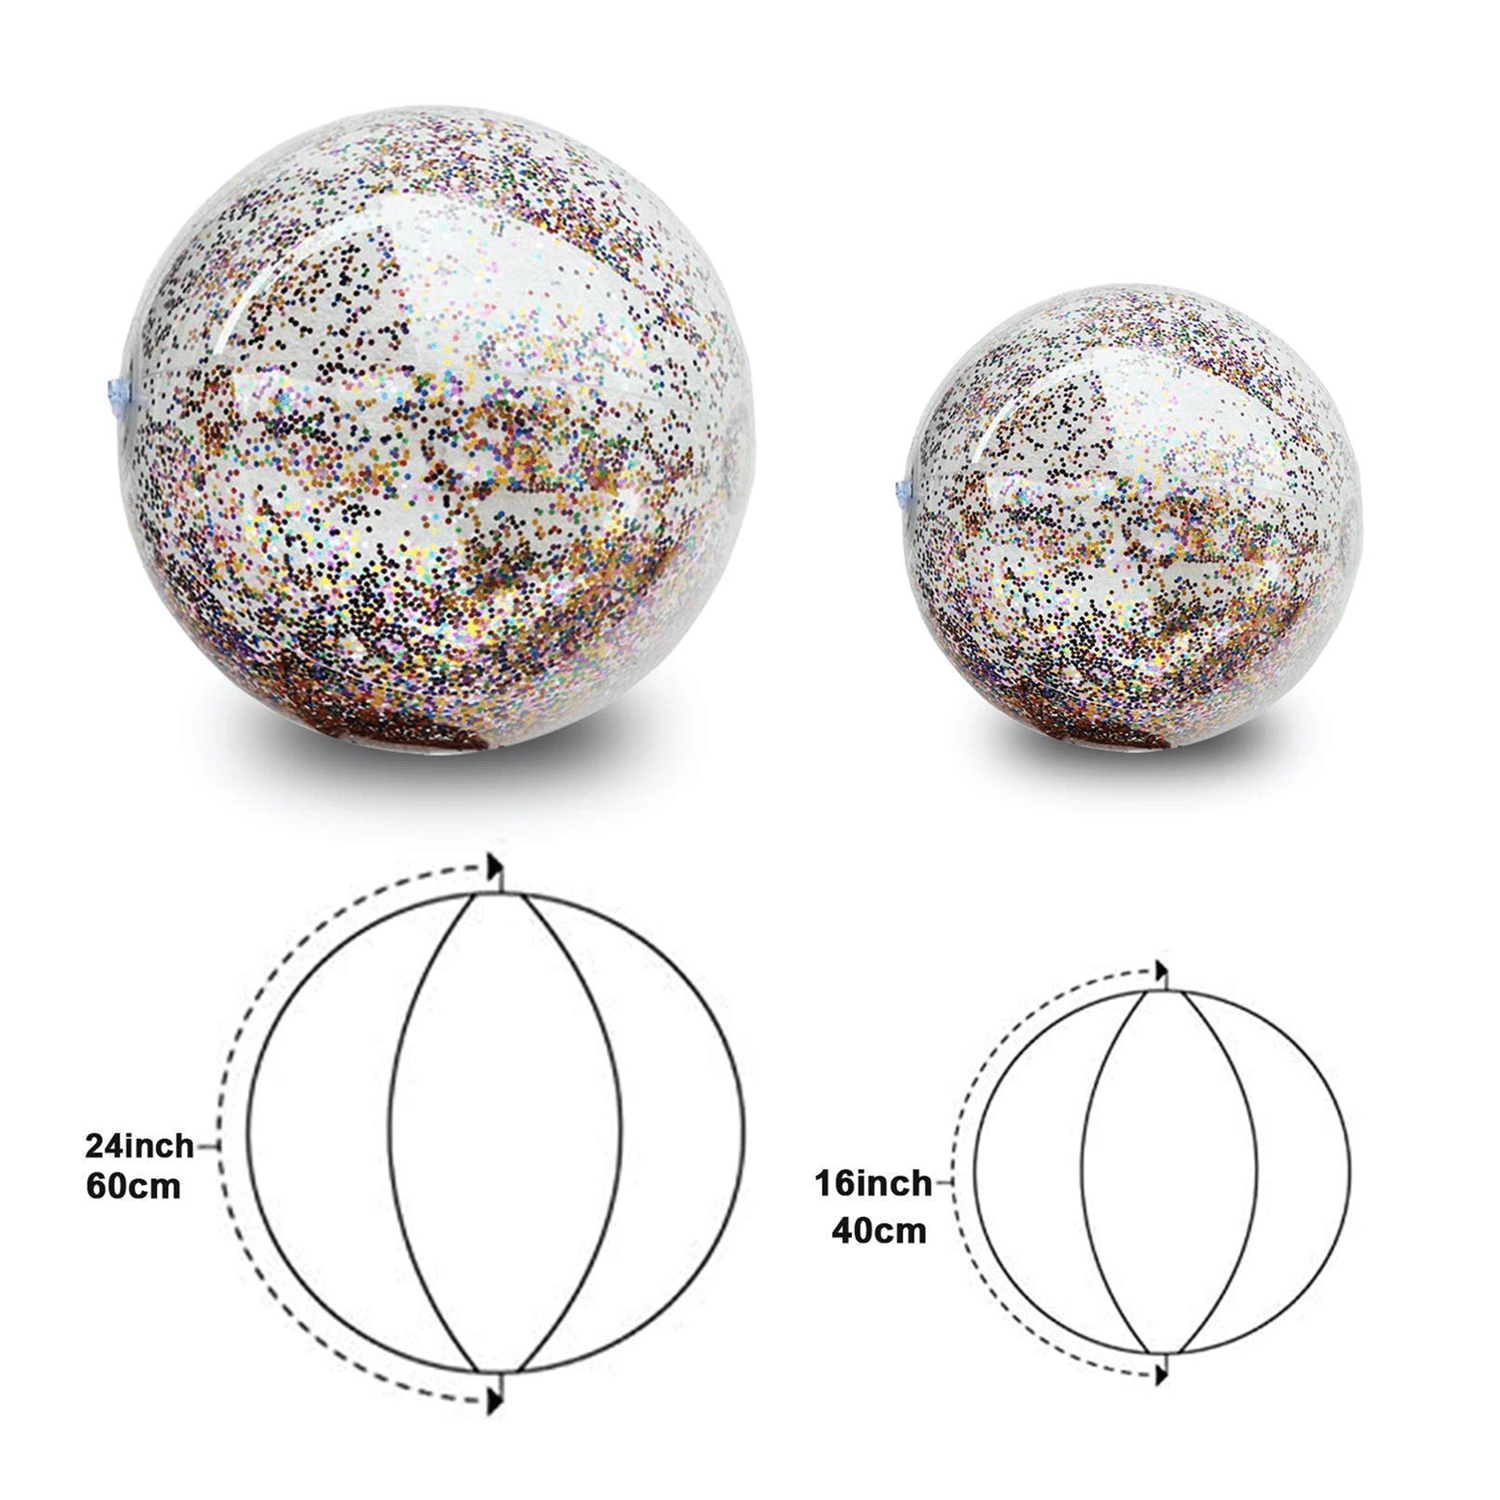 Beach Ball with Confetti Glitters, 5 pcs Inflatable Beach Ball Confetti